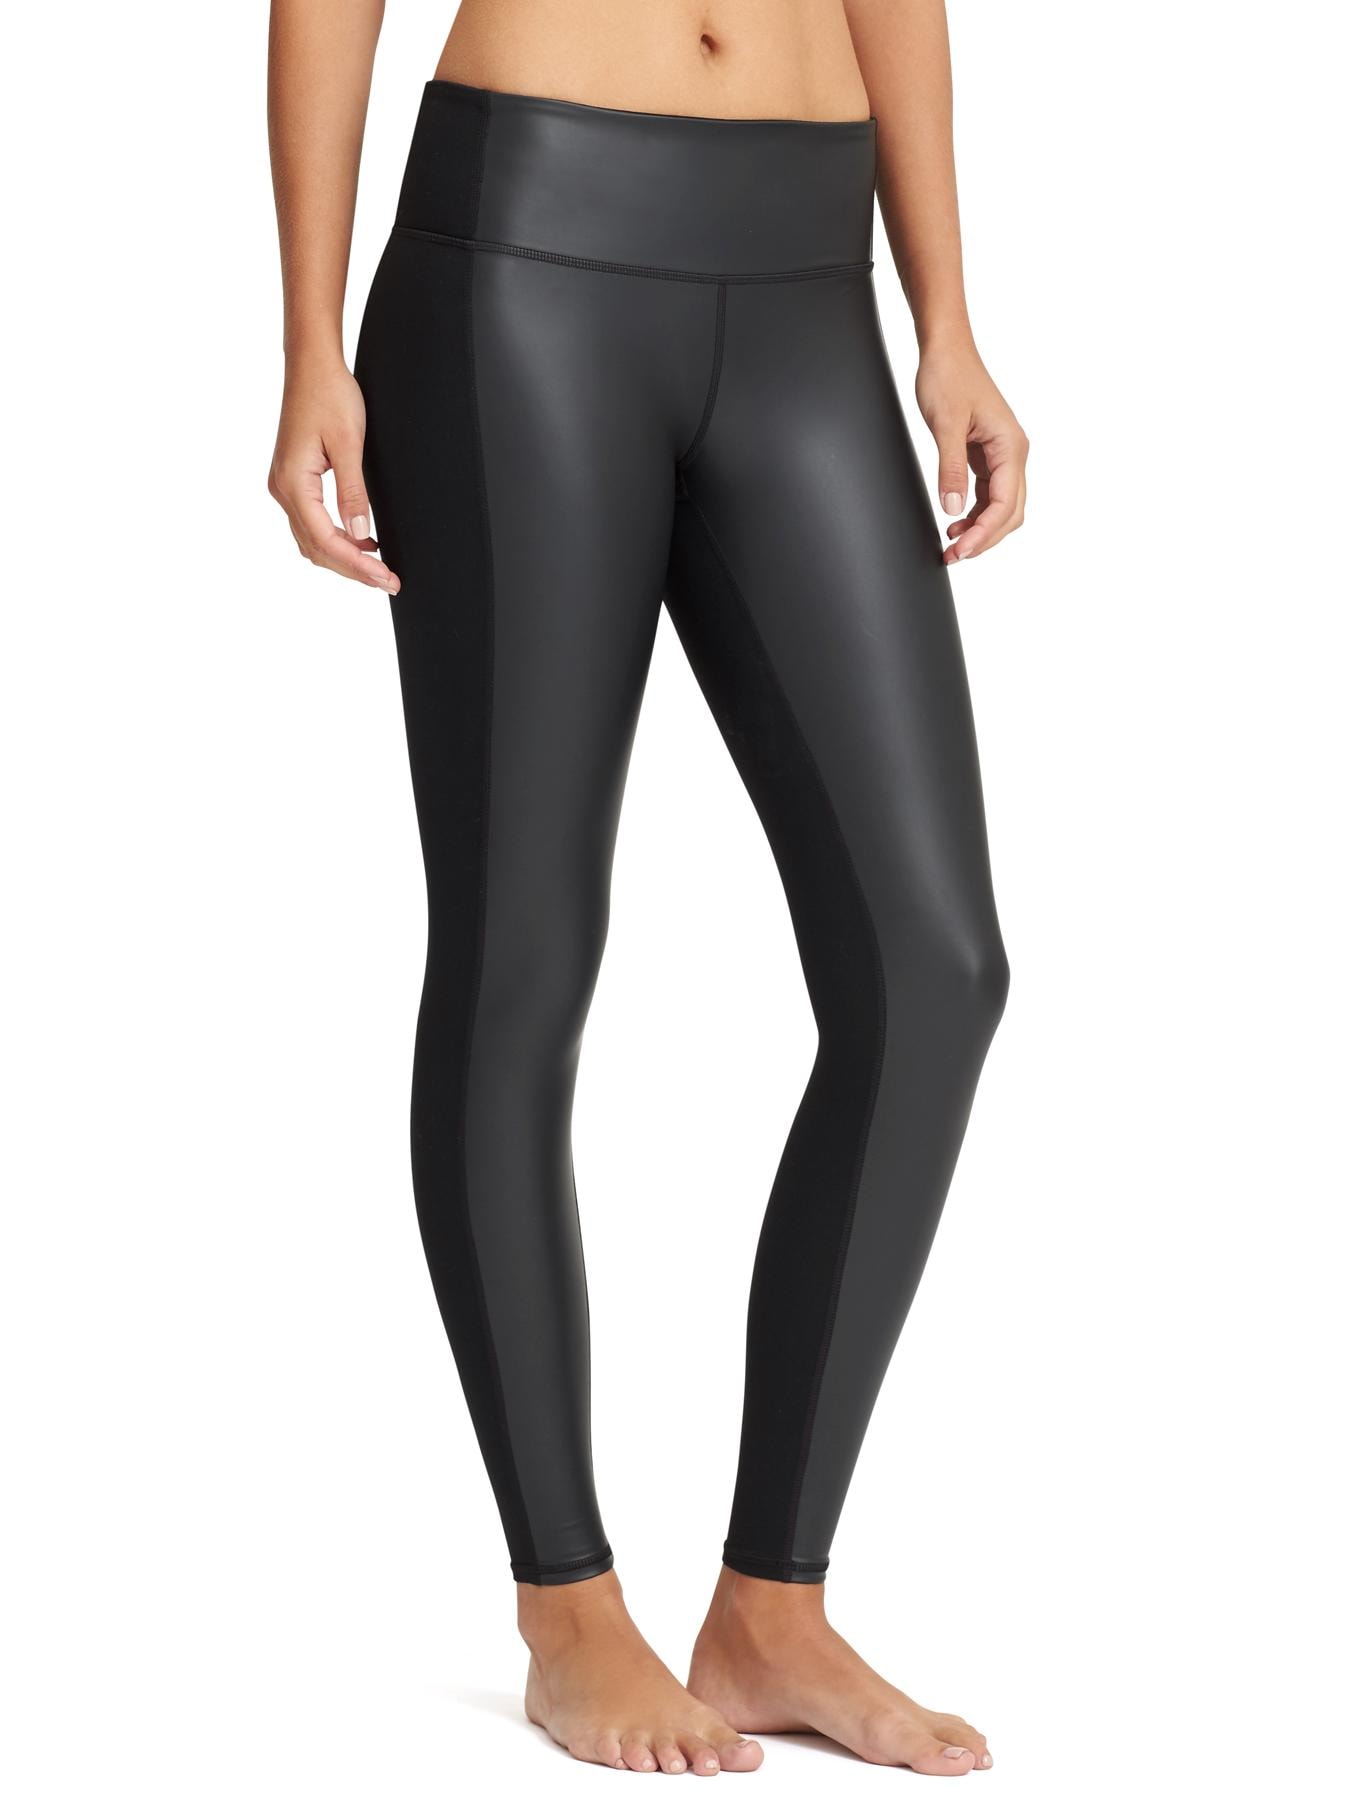 Athleta Faux Leather Gleam Tight 2.0 Leggings in Black Size medium - $36 -  From Michaela